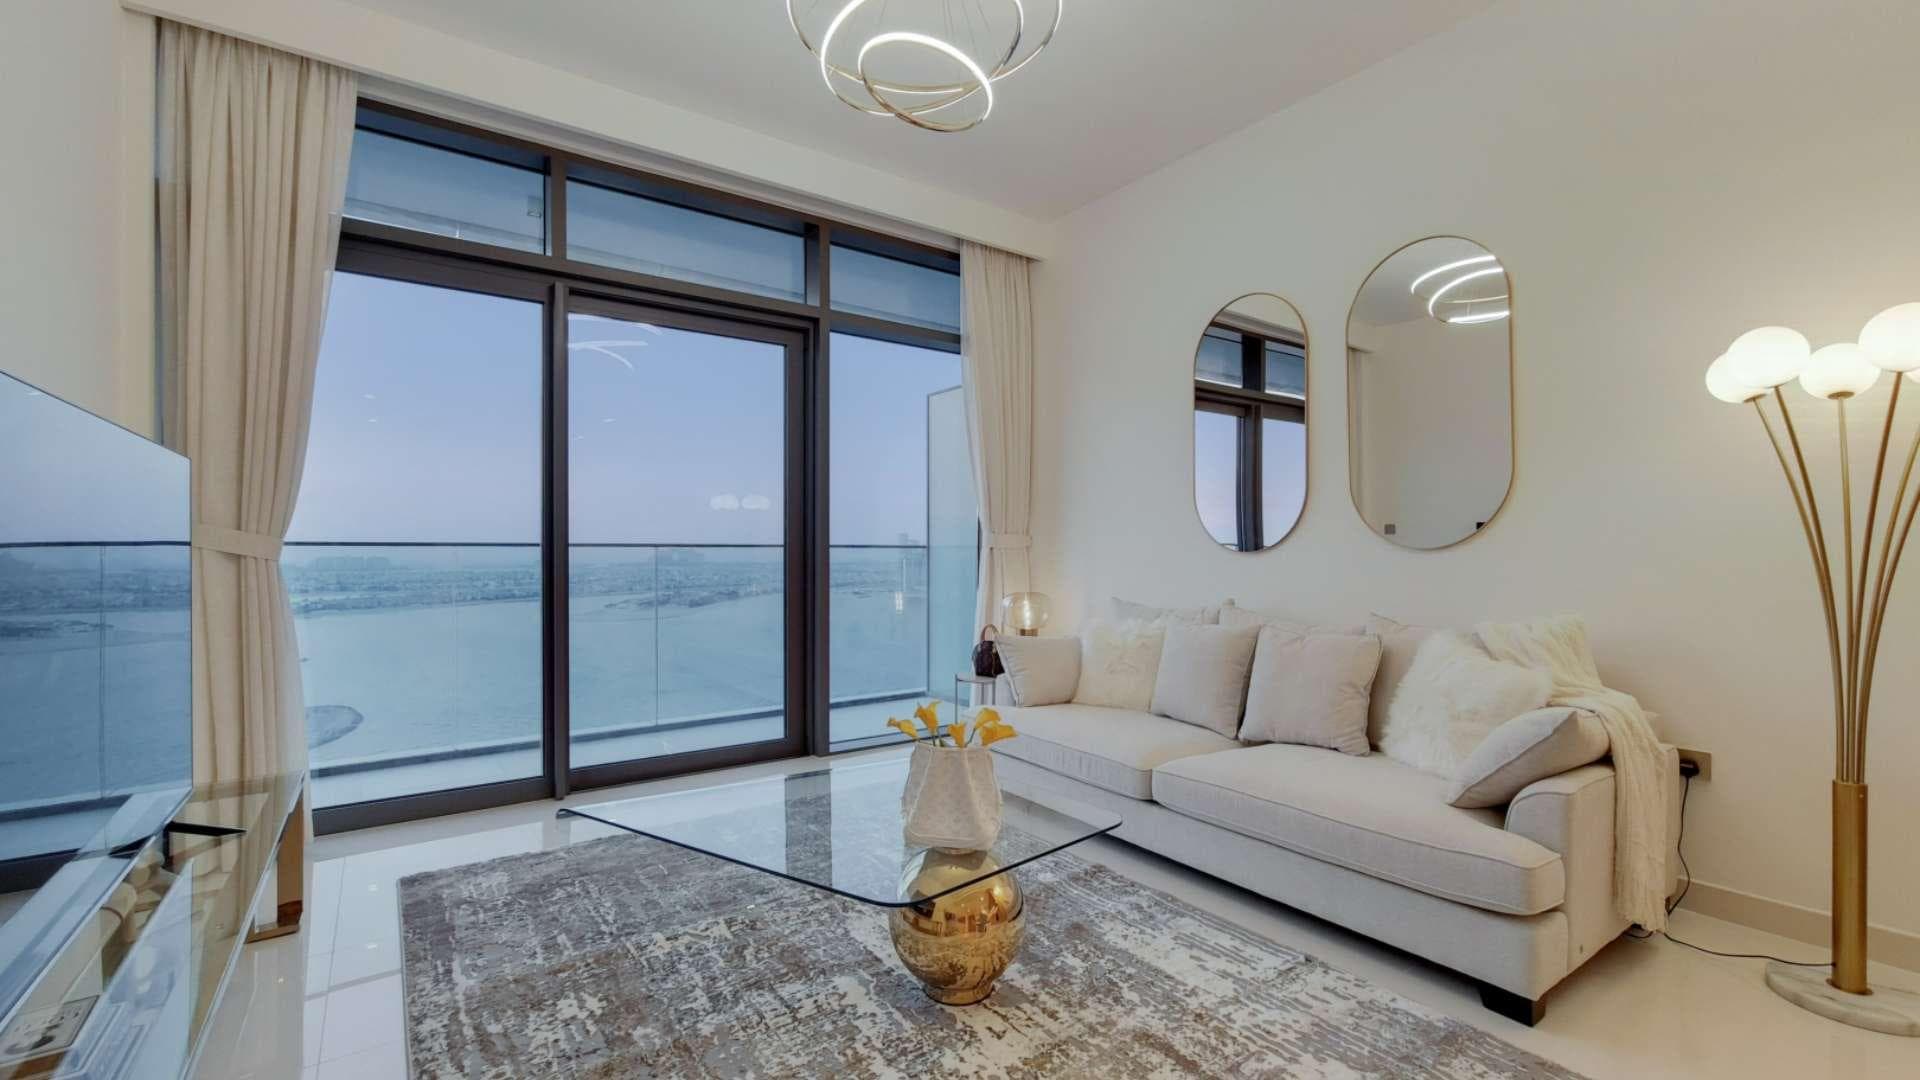 2 Bedroom  For Rent Emaar Beachfront Lp15150 2df25f56d3cc0e00.jpg